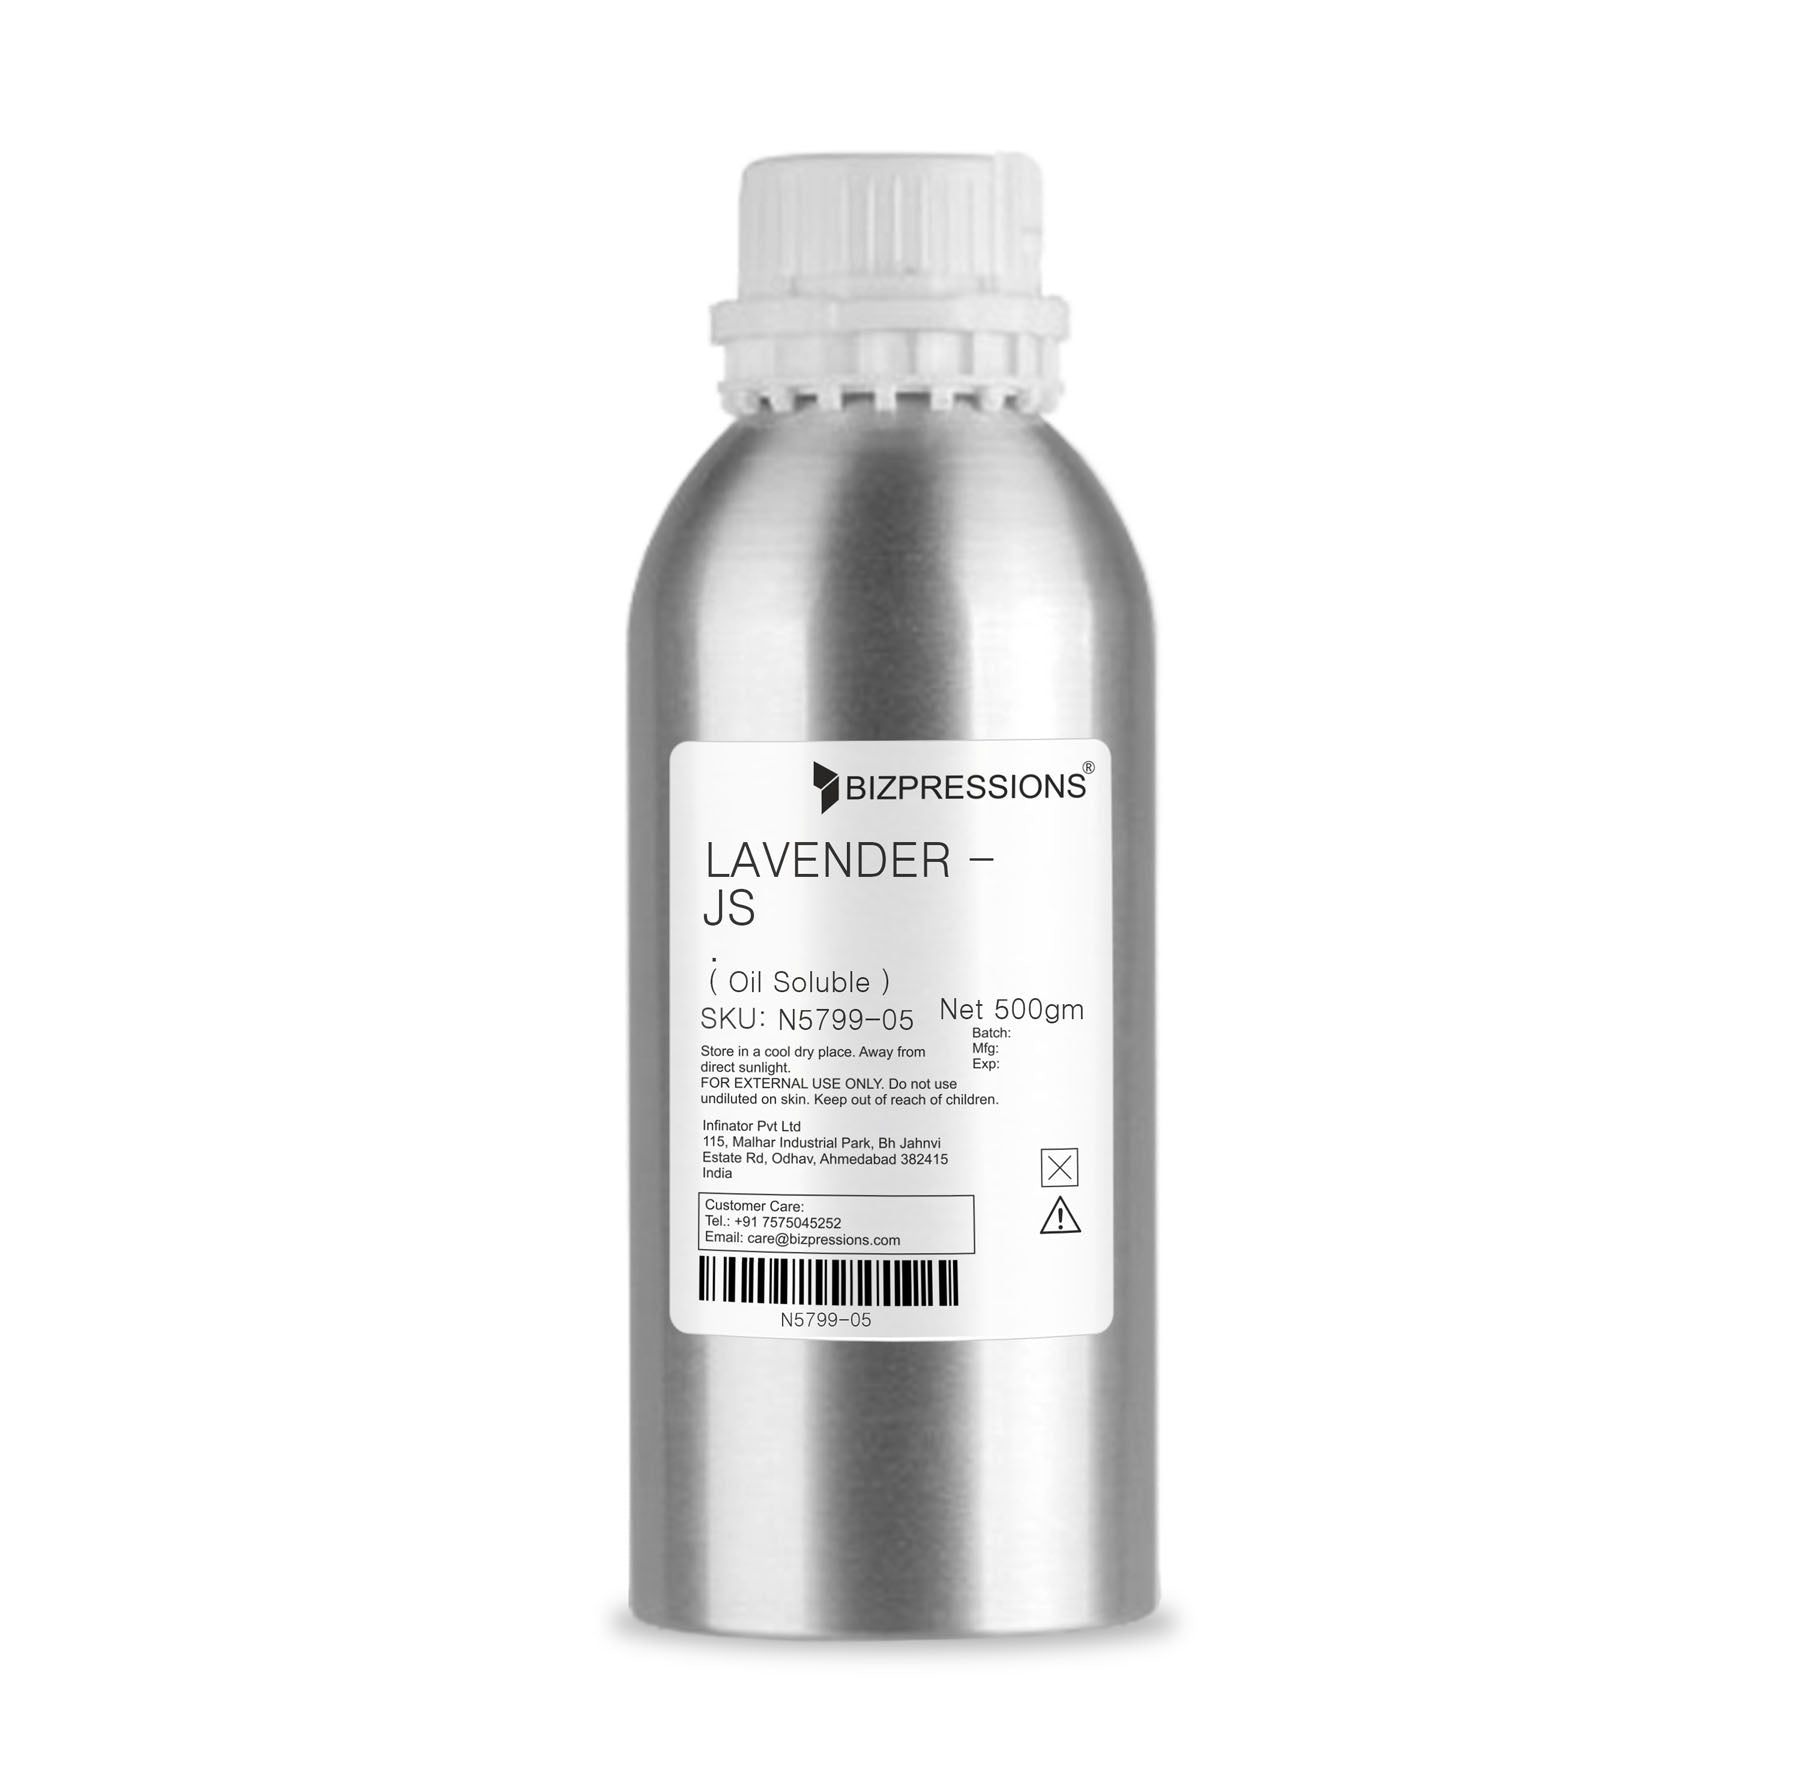 LAVENDER - JS - Fragrance ( Oil Soluble ) - 500 gm